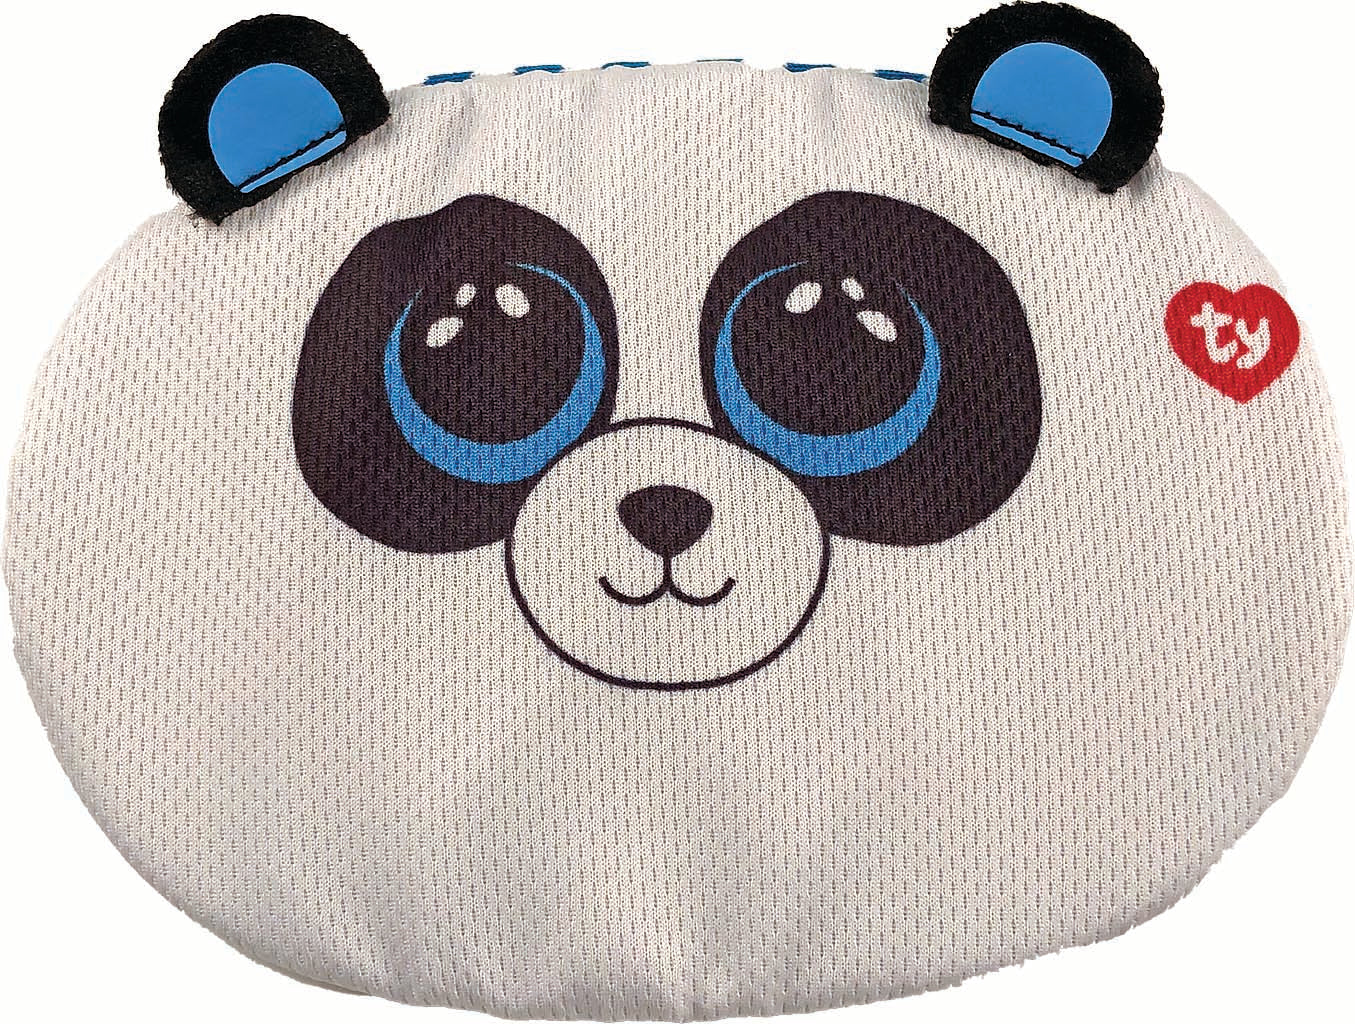 TY Beanie Boos Face Mask Bamboo Panda - stylecreep.com